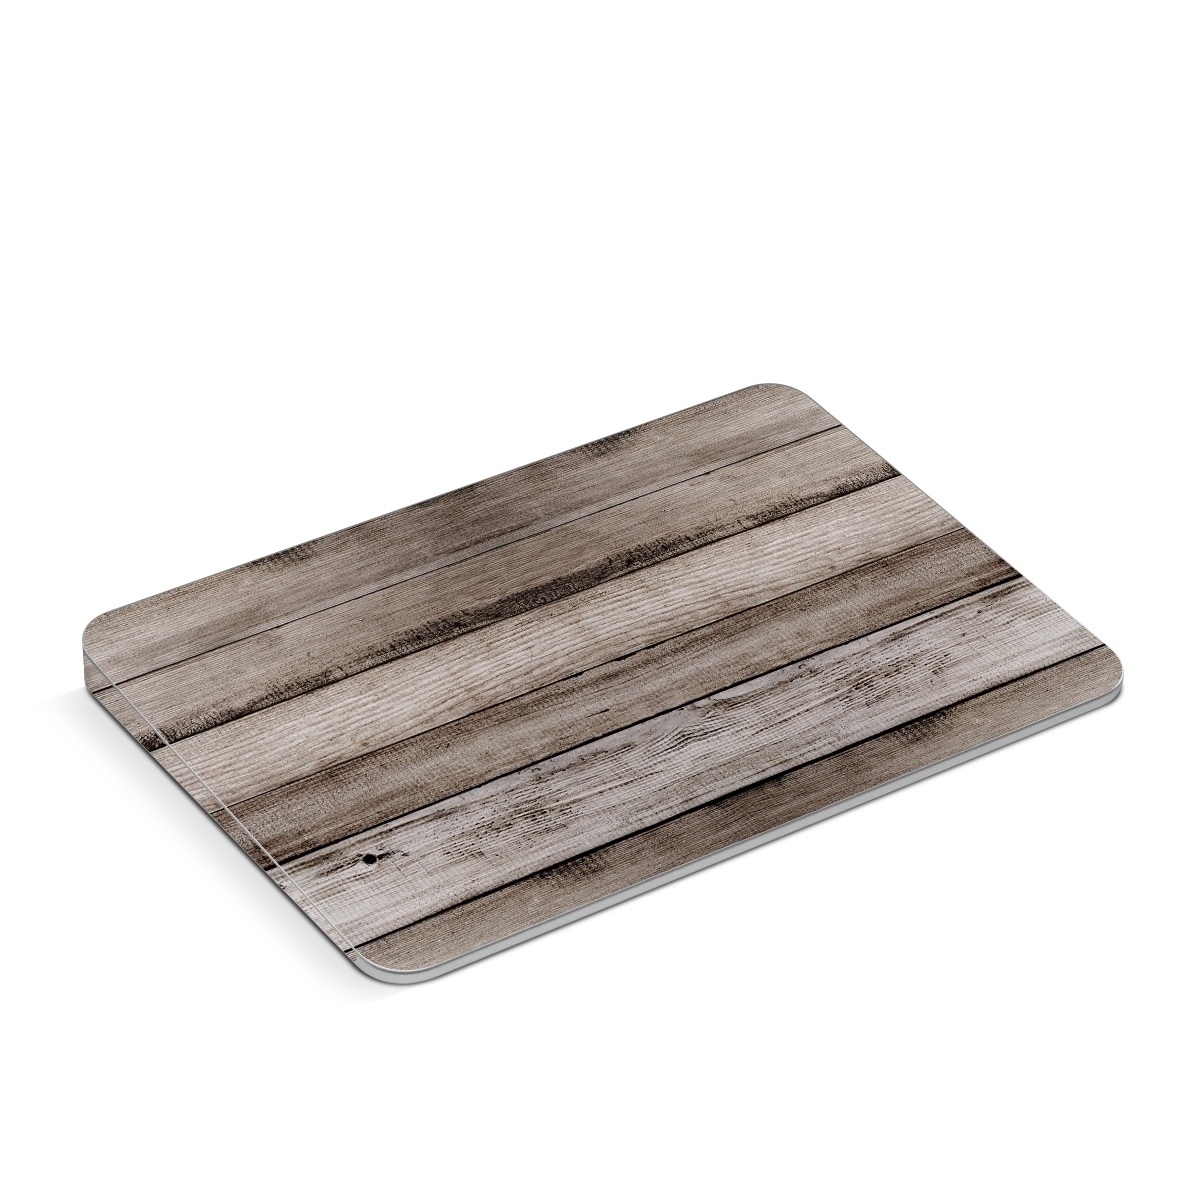 Apple Magic Trackpad Skin design of Wood, Plank, Wood stain, Hardwood, Line, Pattern, Floor, Lumber, Wood flooring, Plywood, with brown, black colors